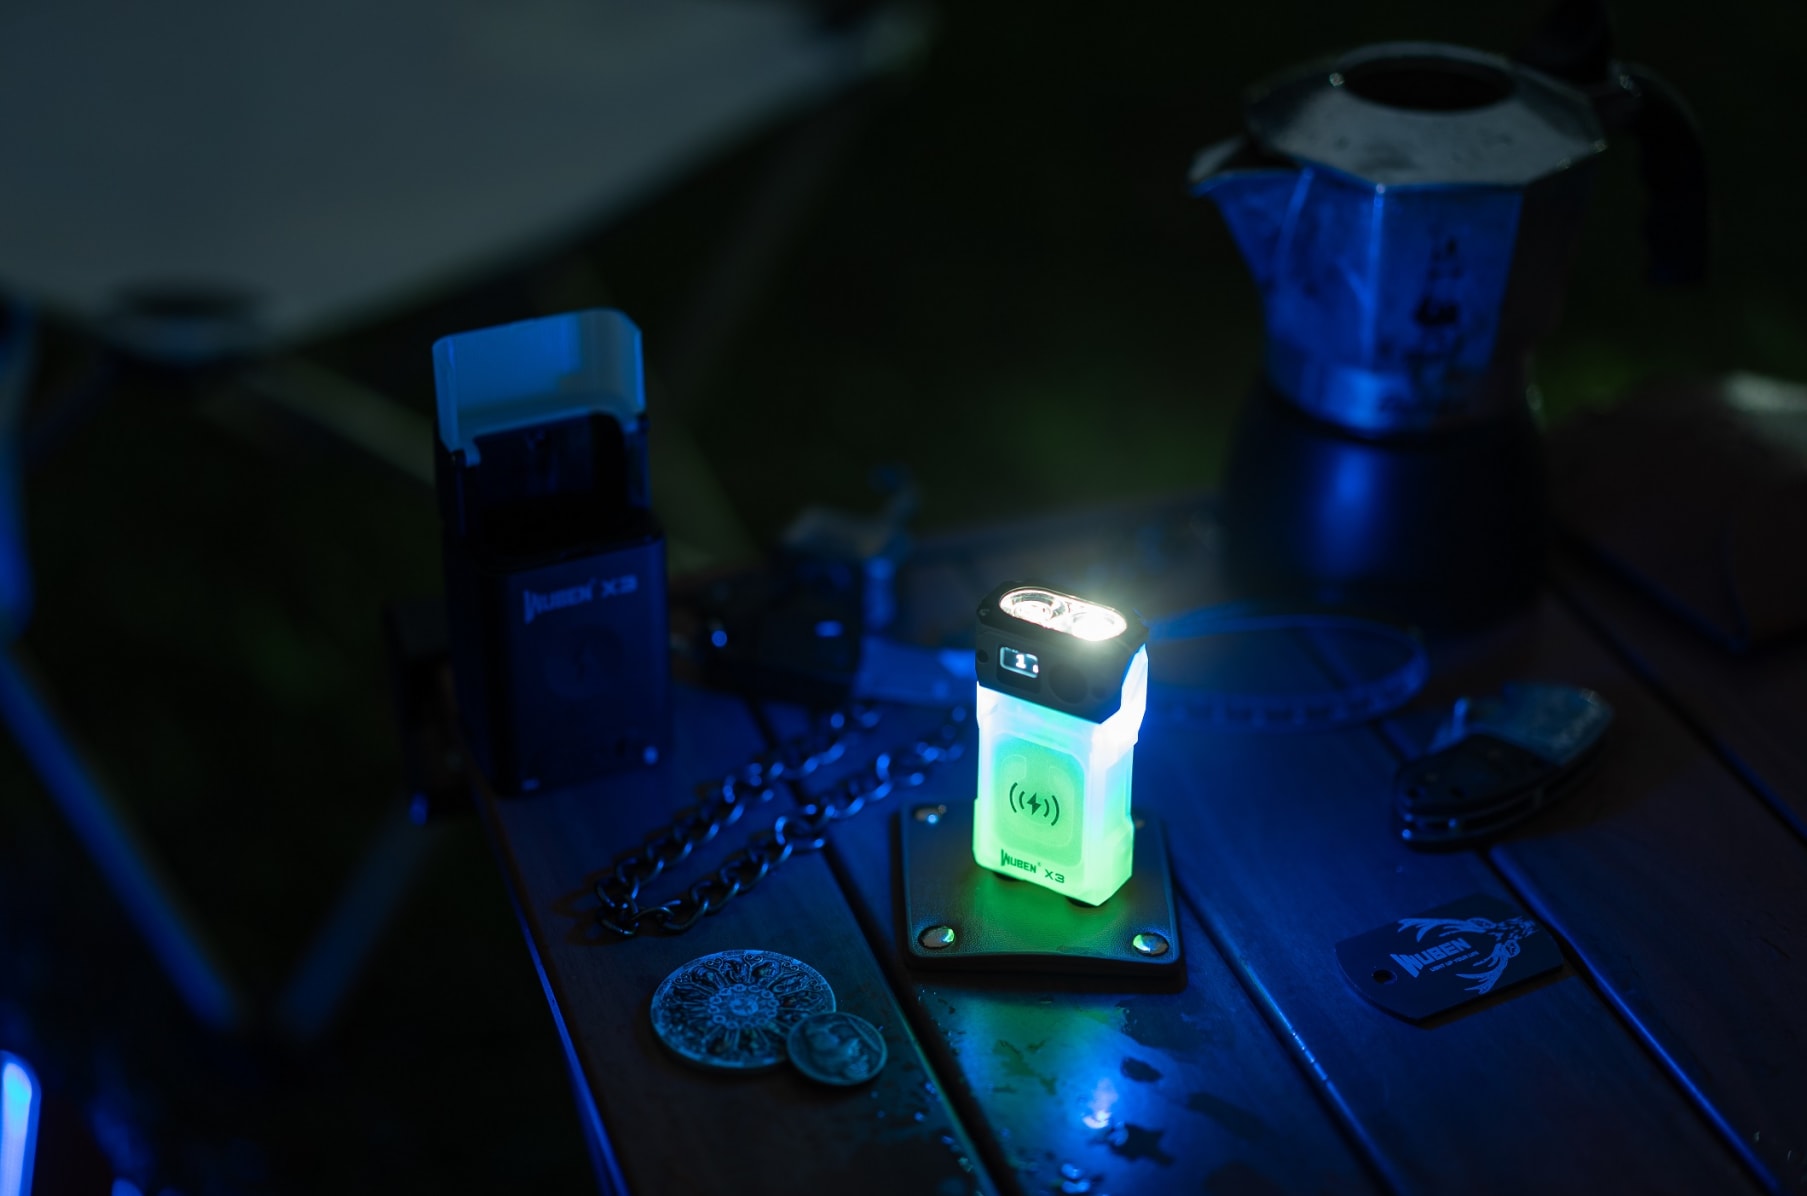 Wuben X3 EDC Flashlight, Born for Ultralight Outdoors by WUBEN — Kickstarter